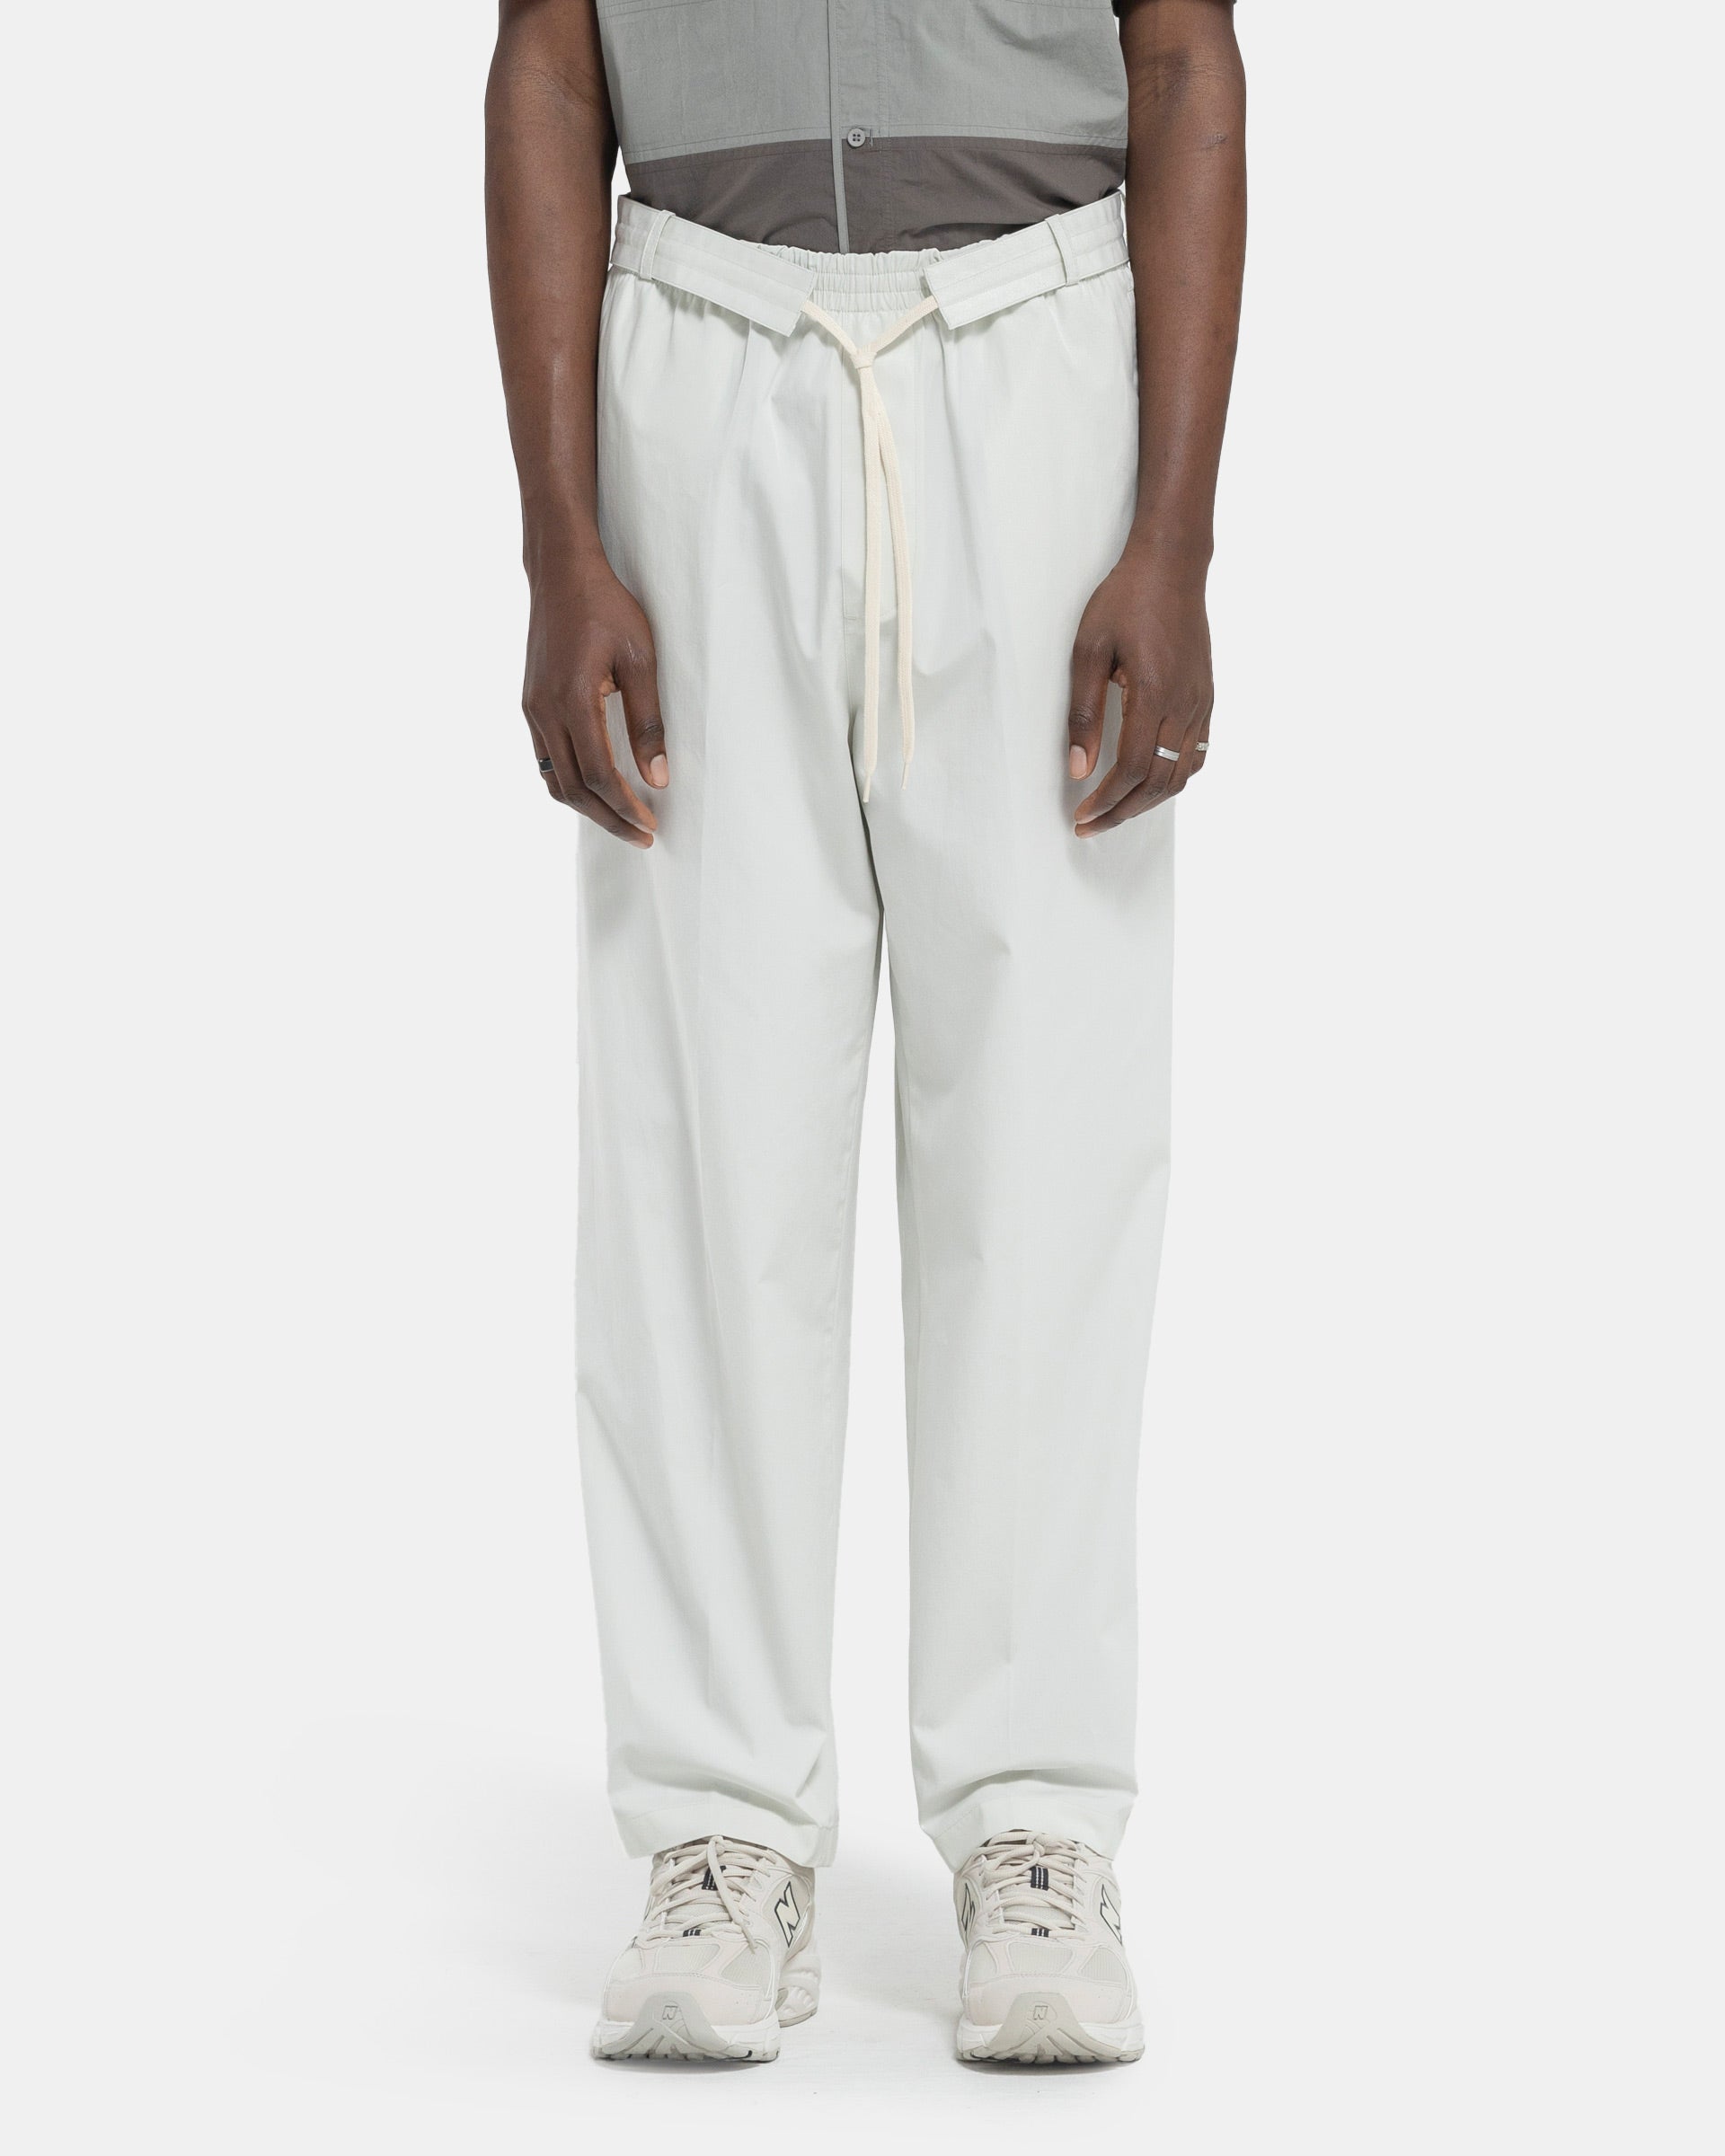 Model wearing Craig Green Circle Worker Trouser in Ecru on white background